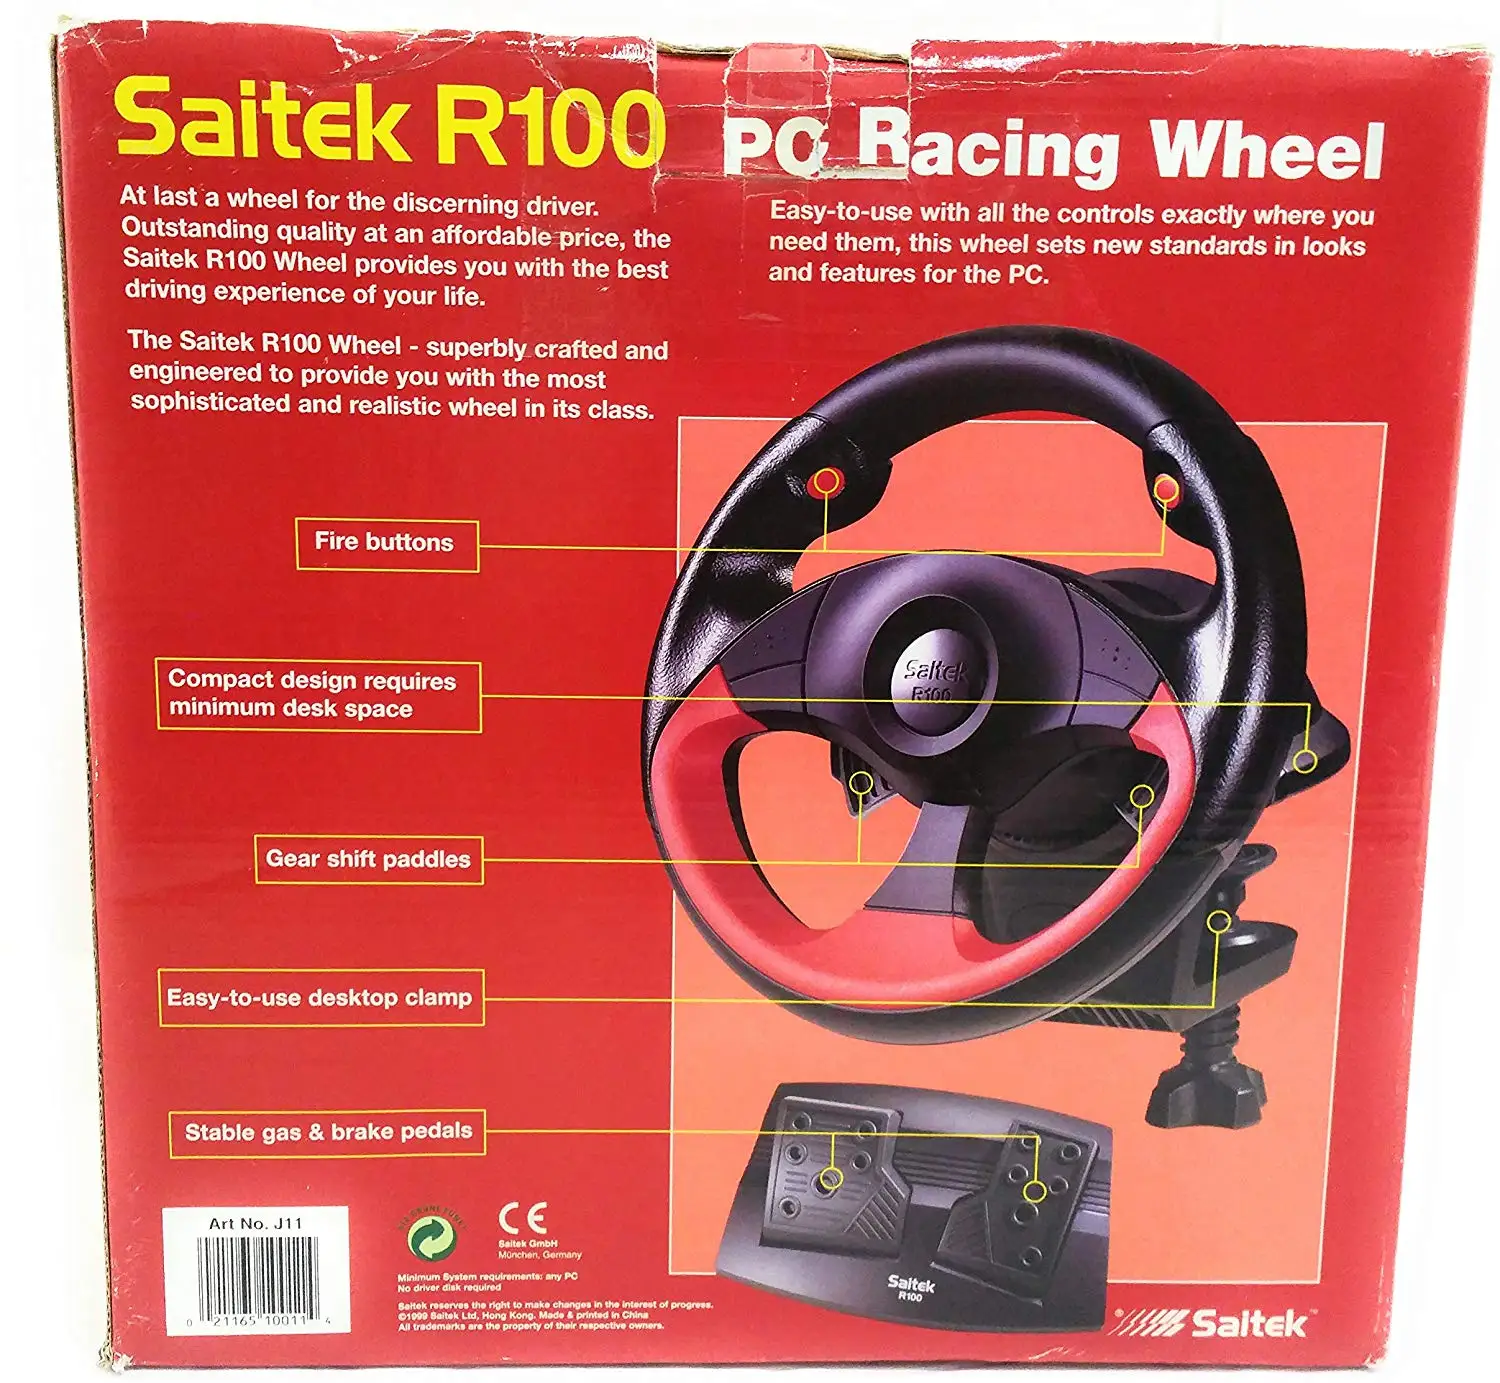 Mad catz pro racing wheel pc drivers download